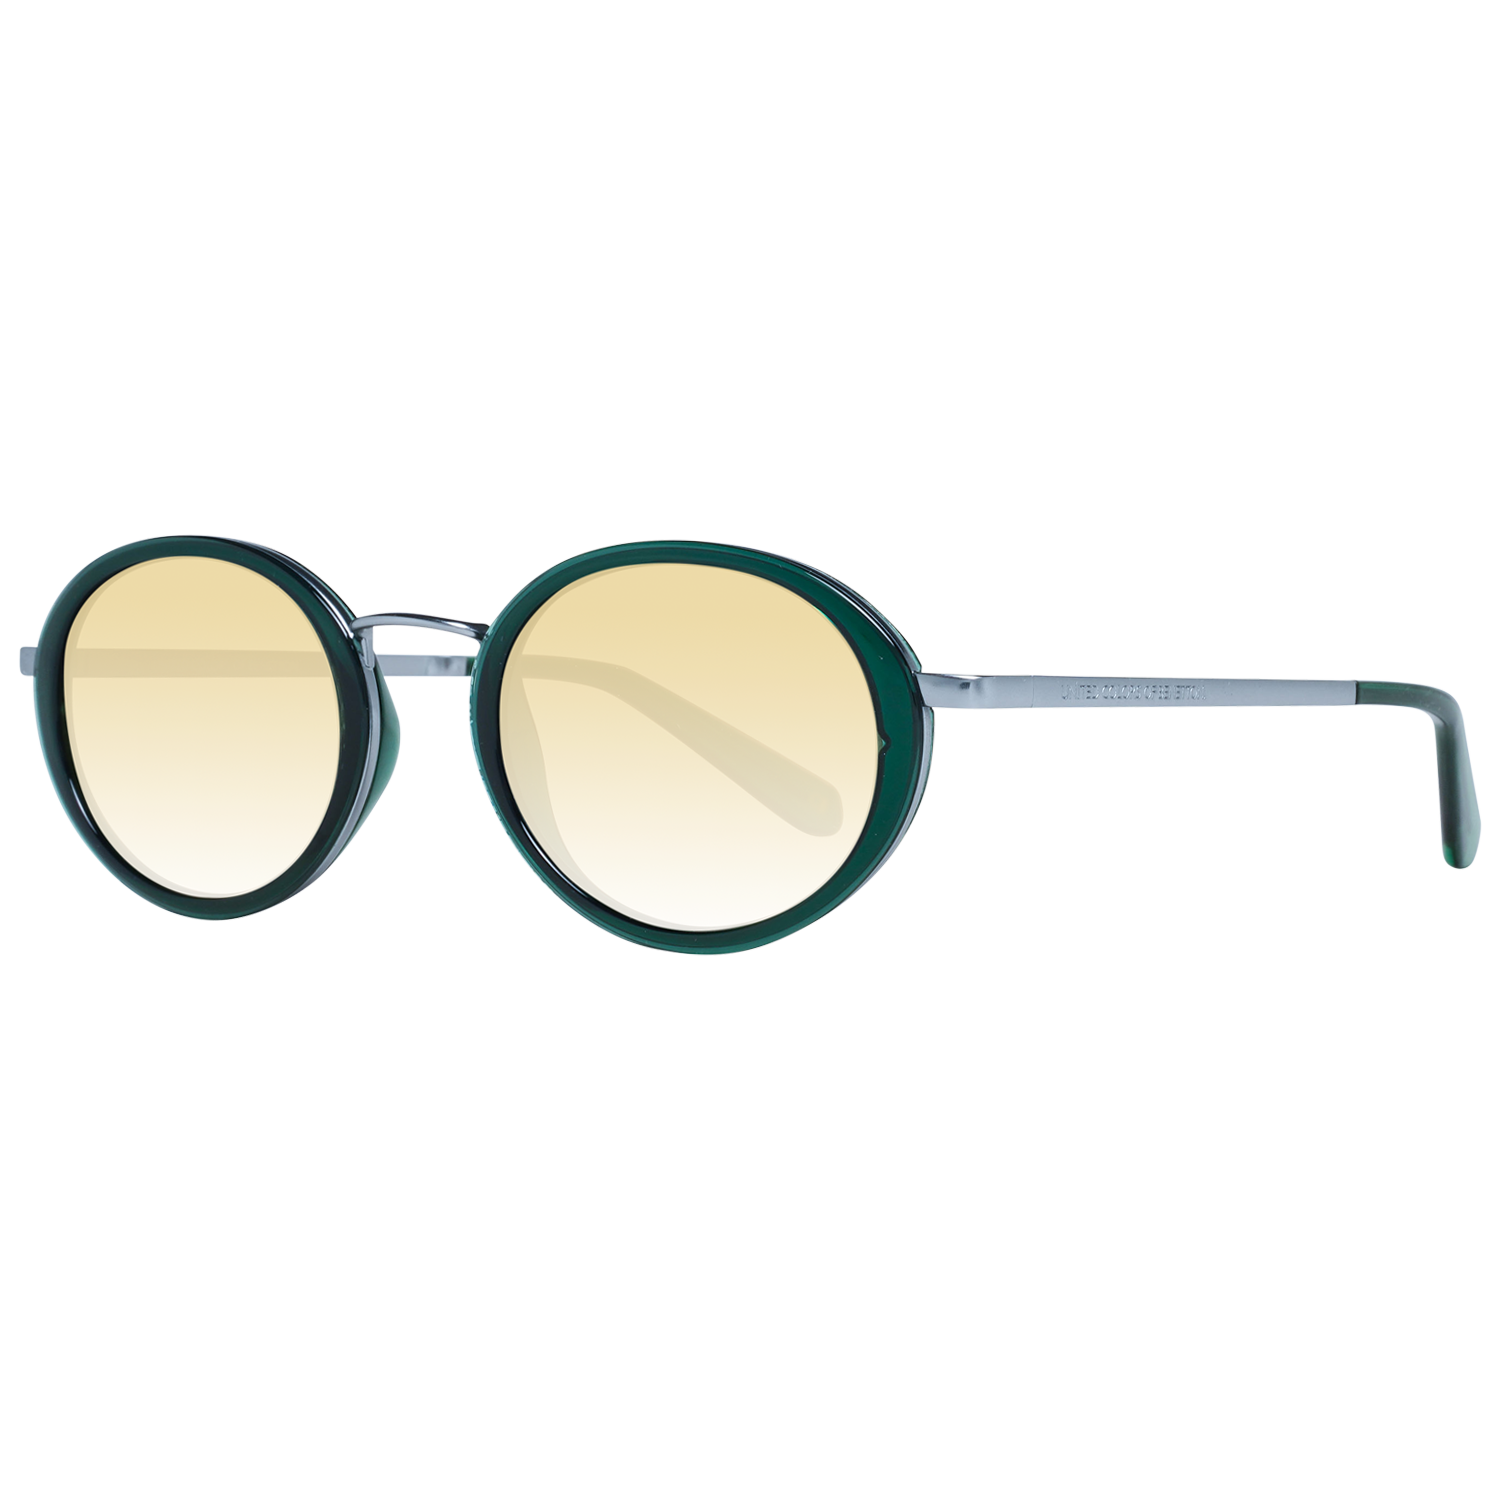 Benetton Sunglasses Benetton Sunglasses BE5039 527 49 Eyeglasses Eyewear UK USA Australia 